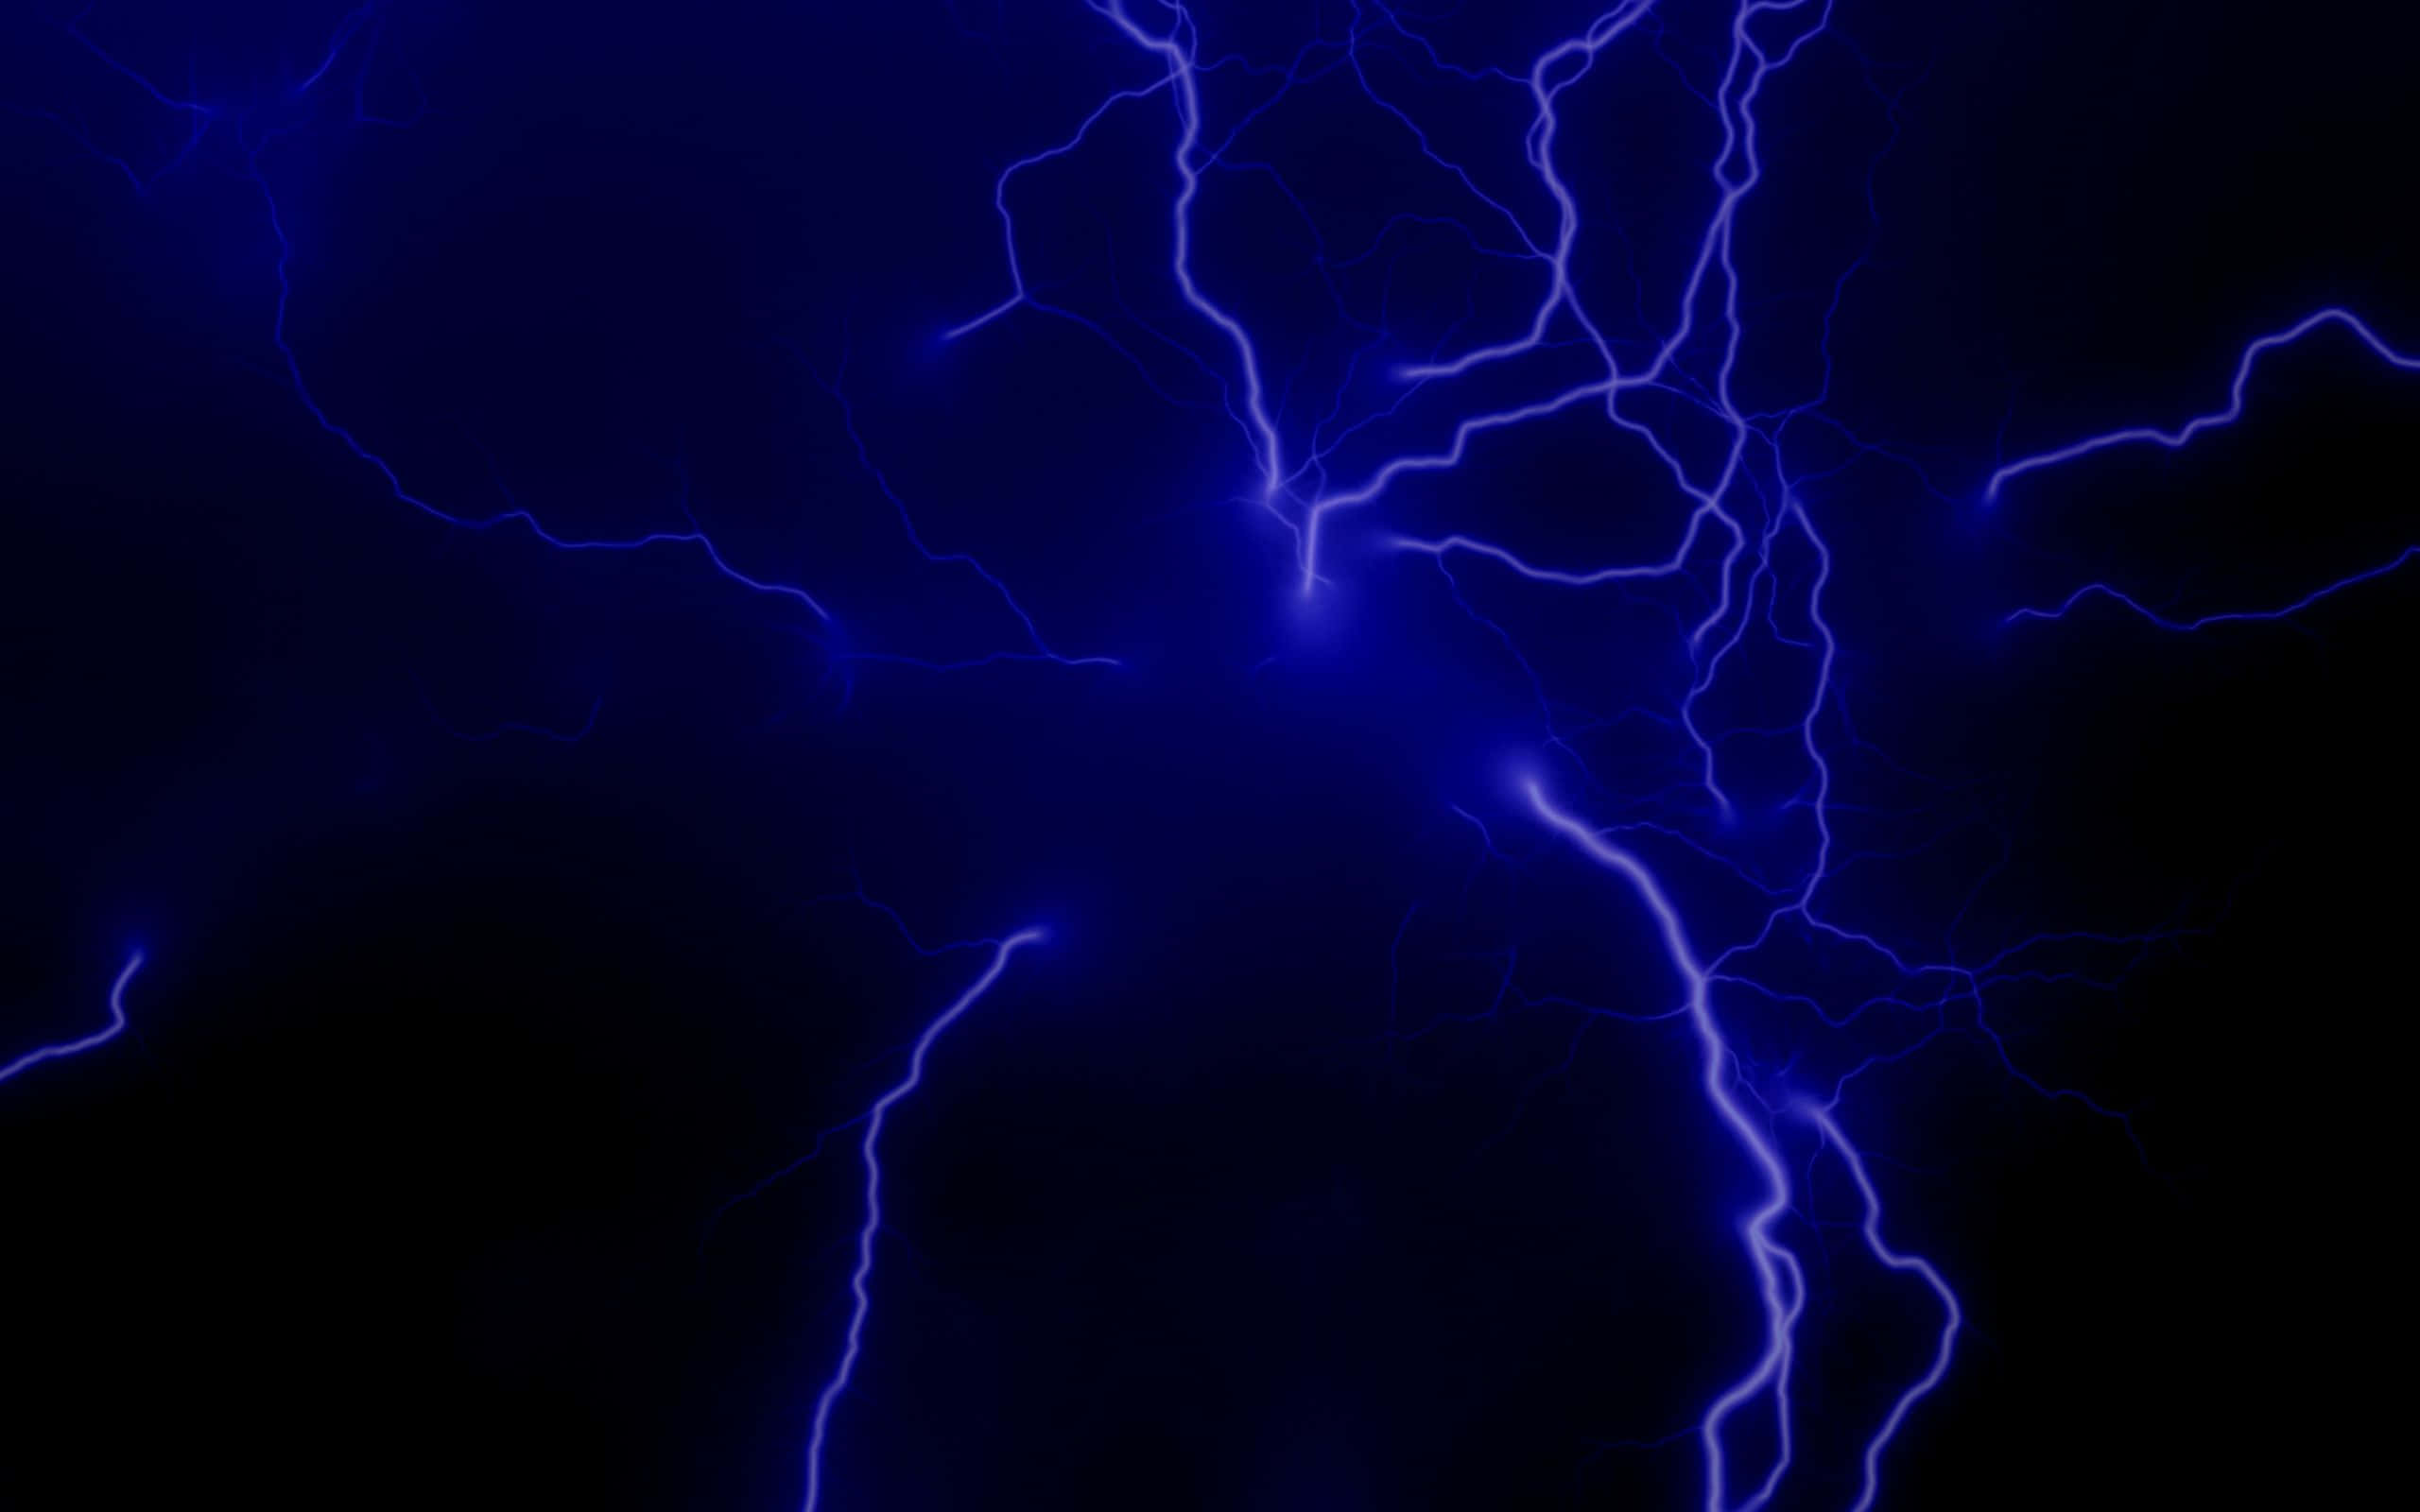 Lightning and thunder across a nighttime sky